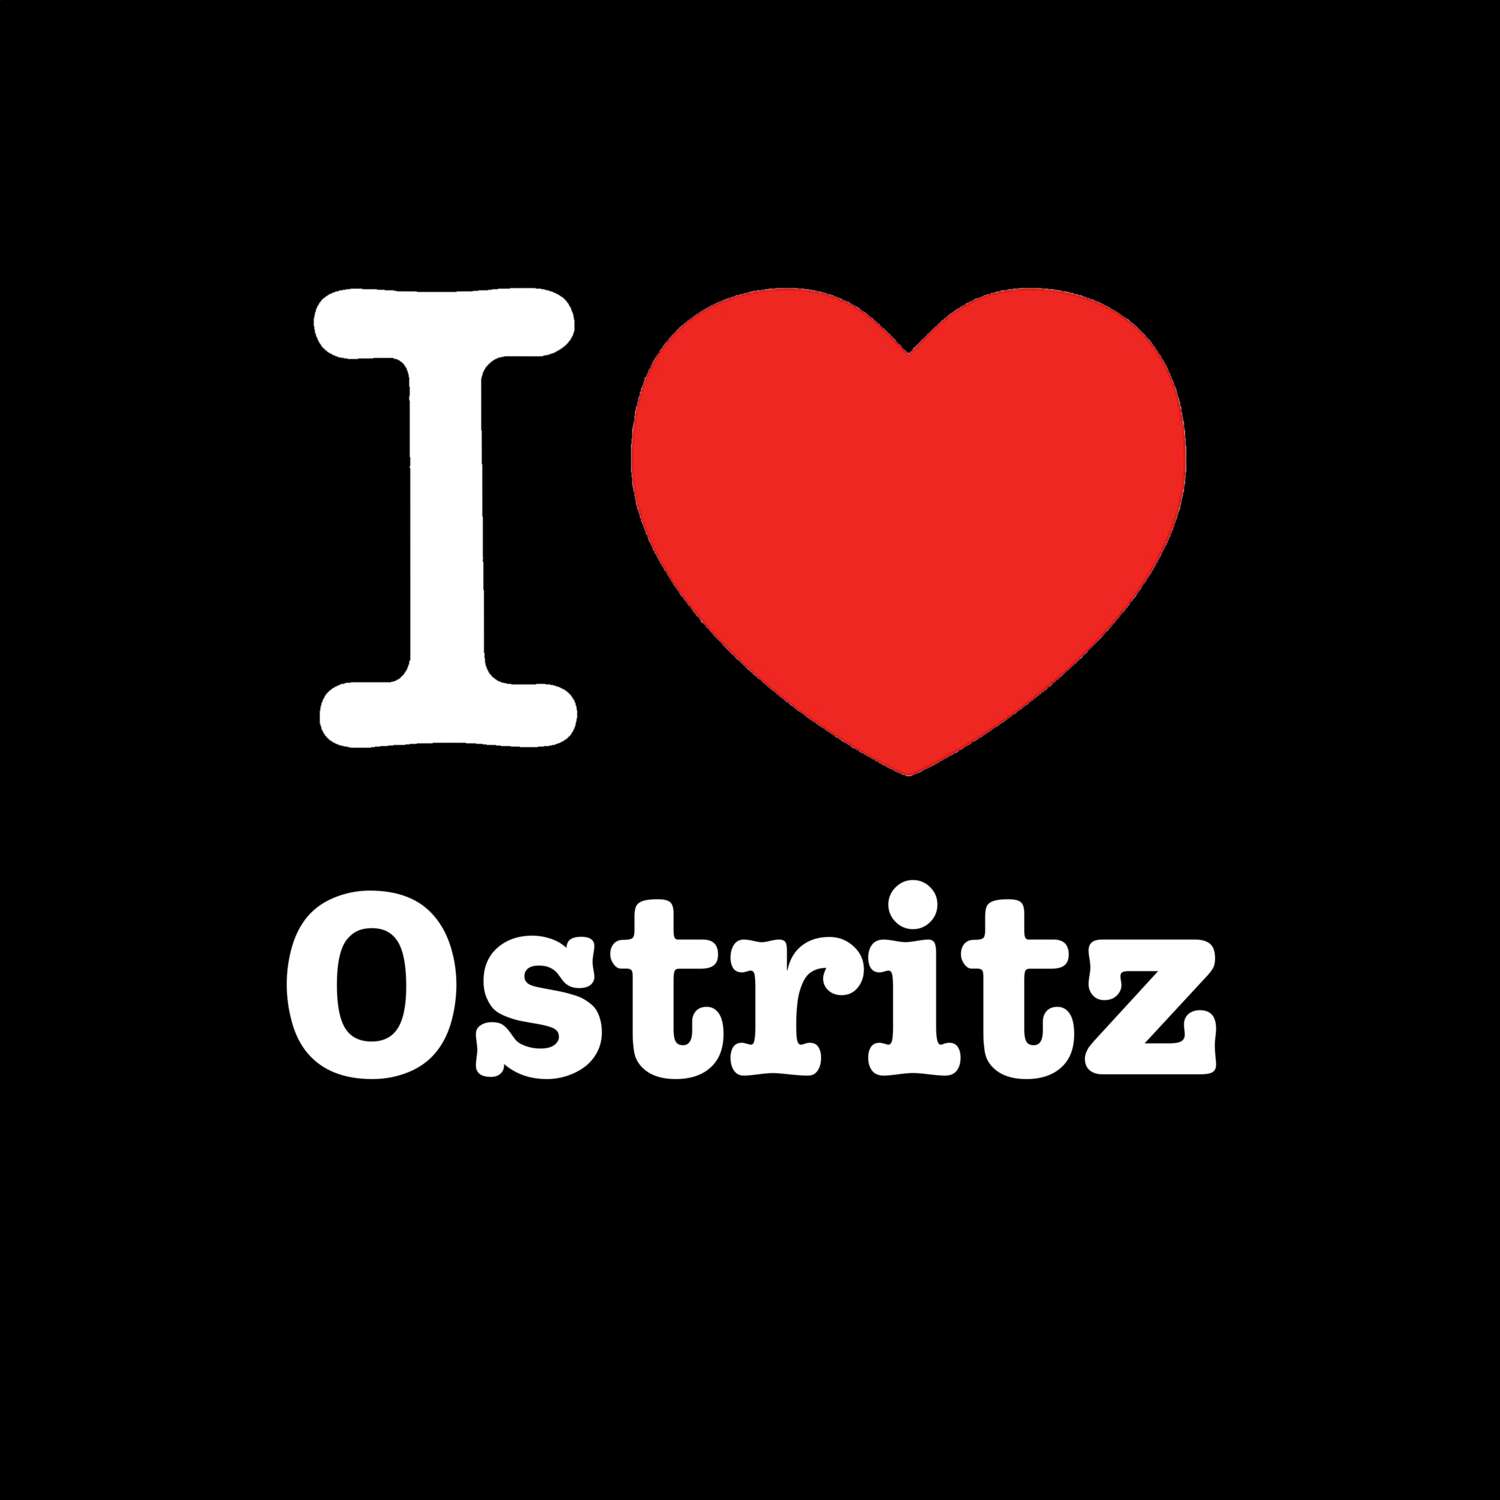 Ostritz T-Shirt »I love«